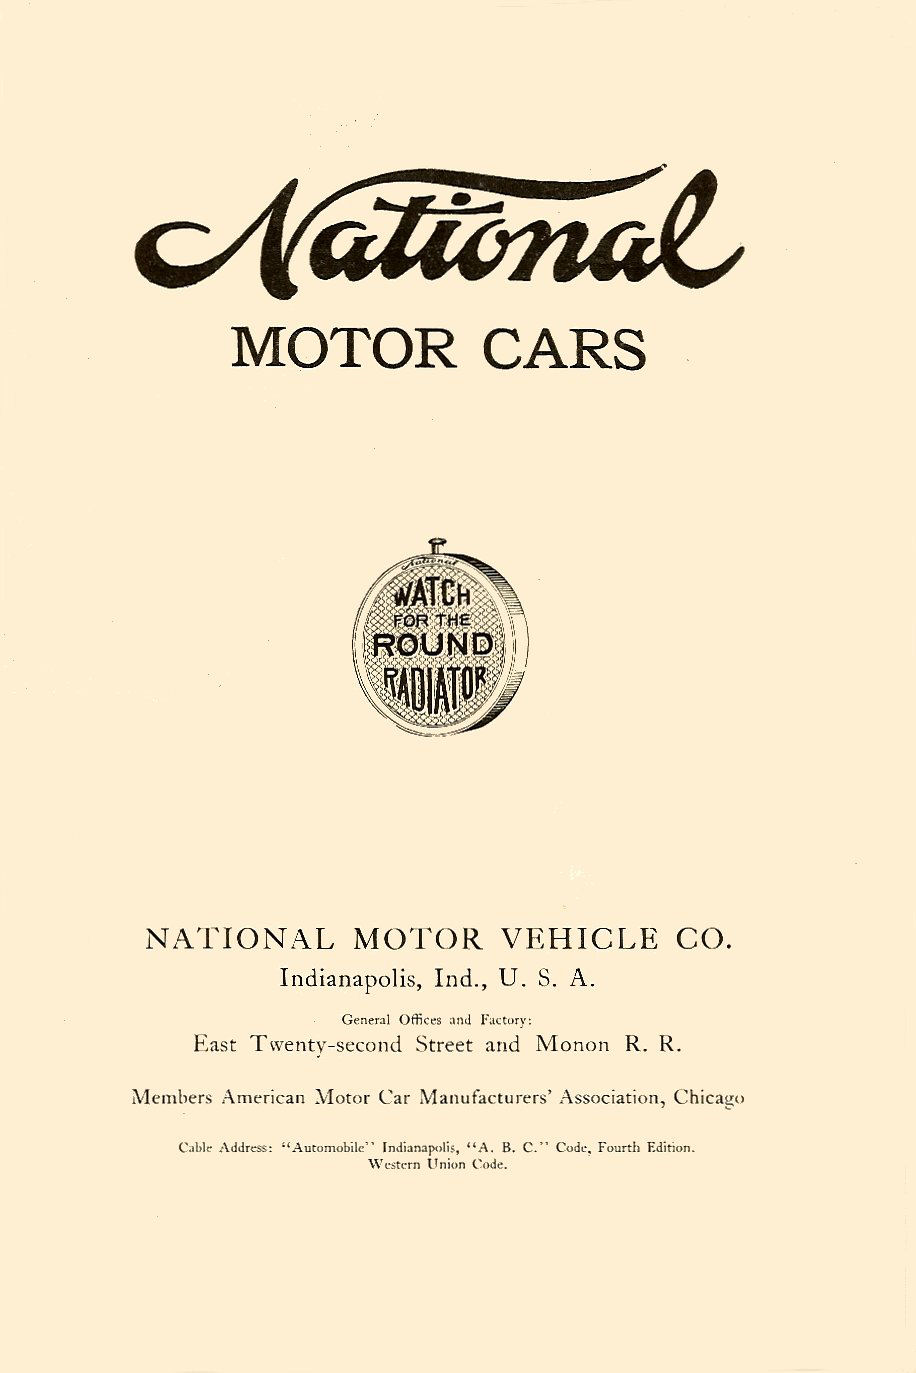 1906_National_Motor_Cars-01